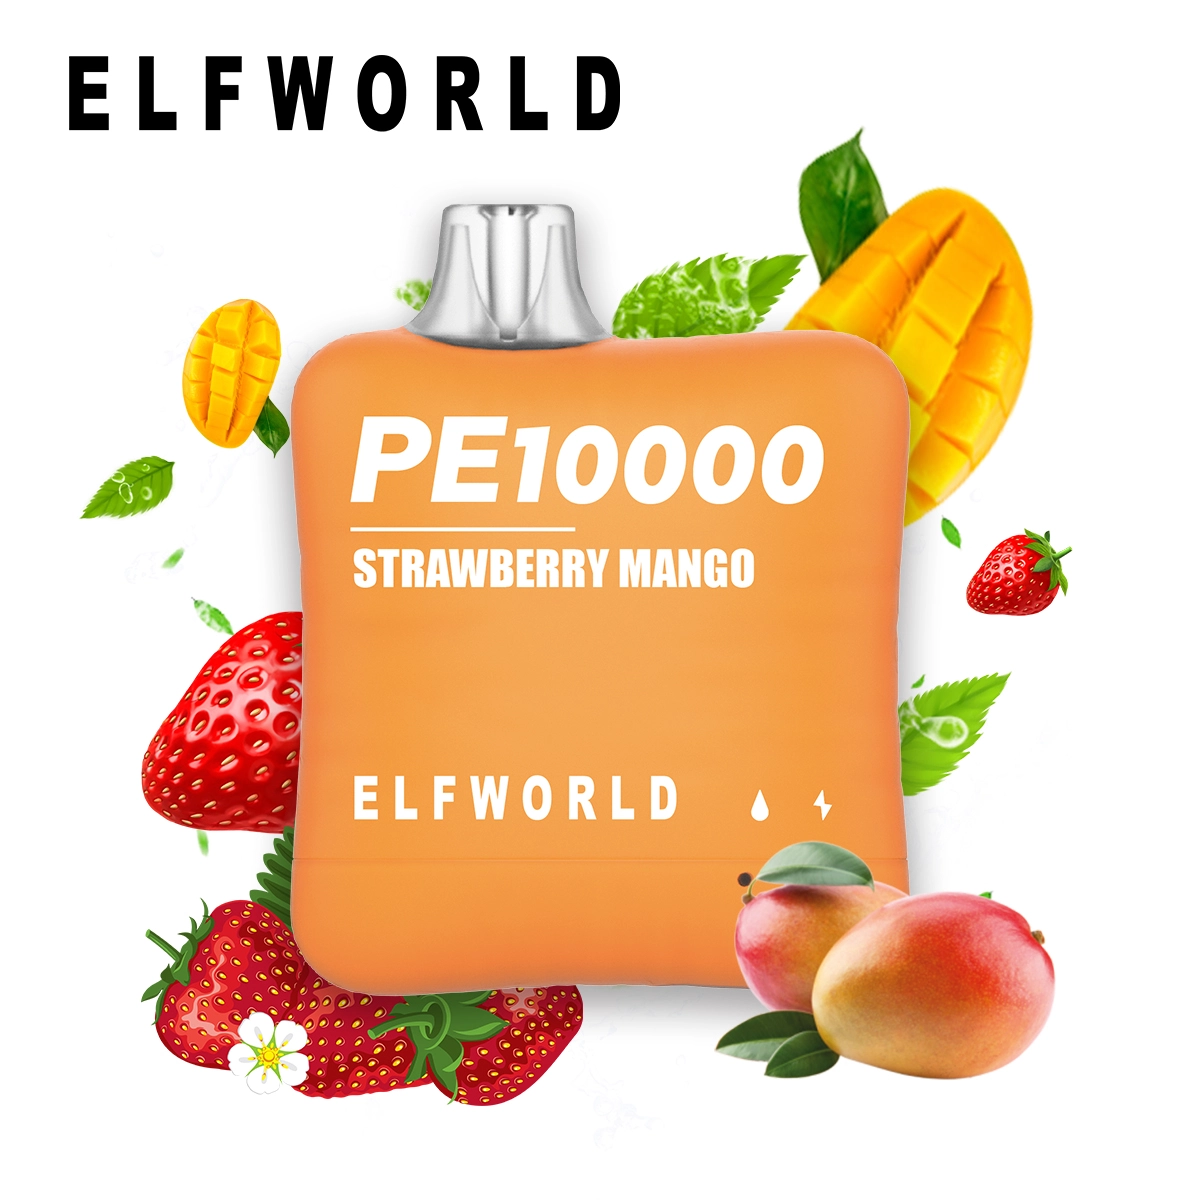 Elf World PE 10000 Strawberry Mango